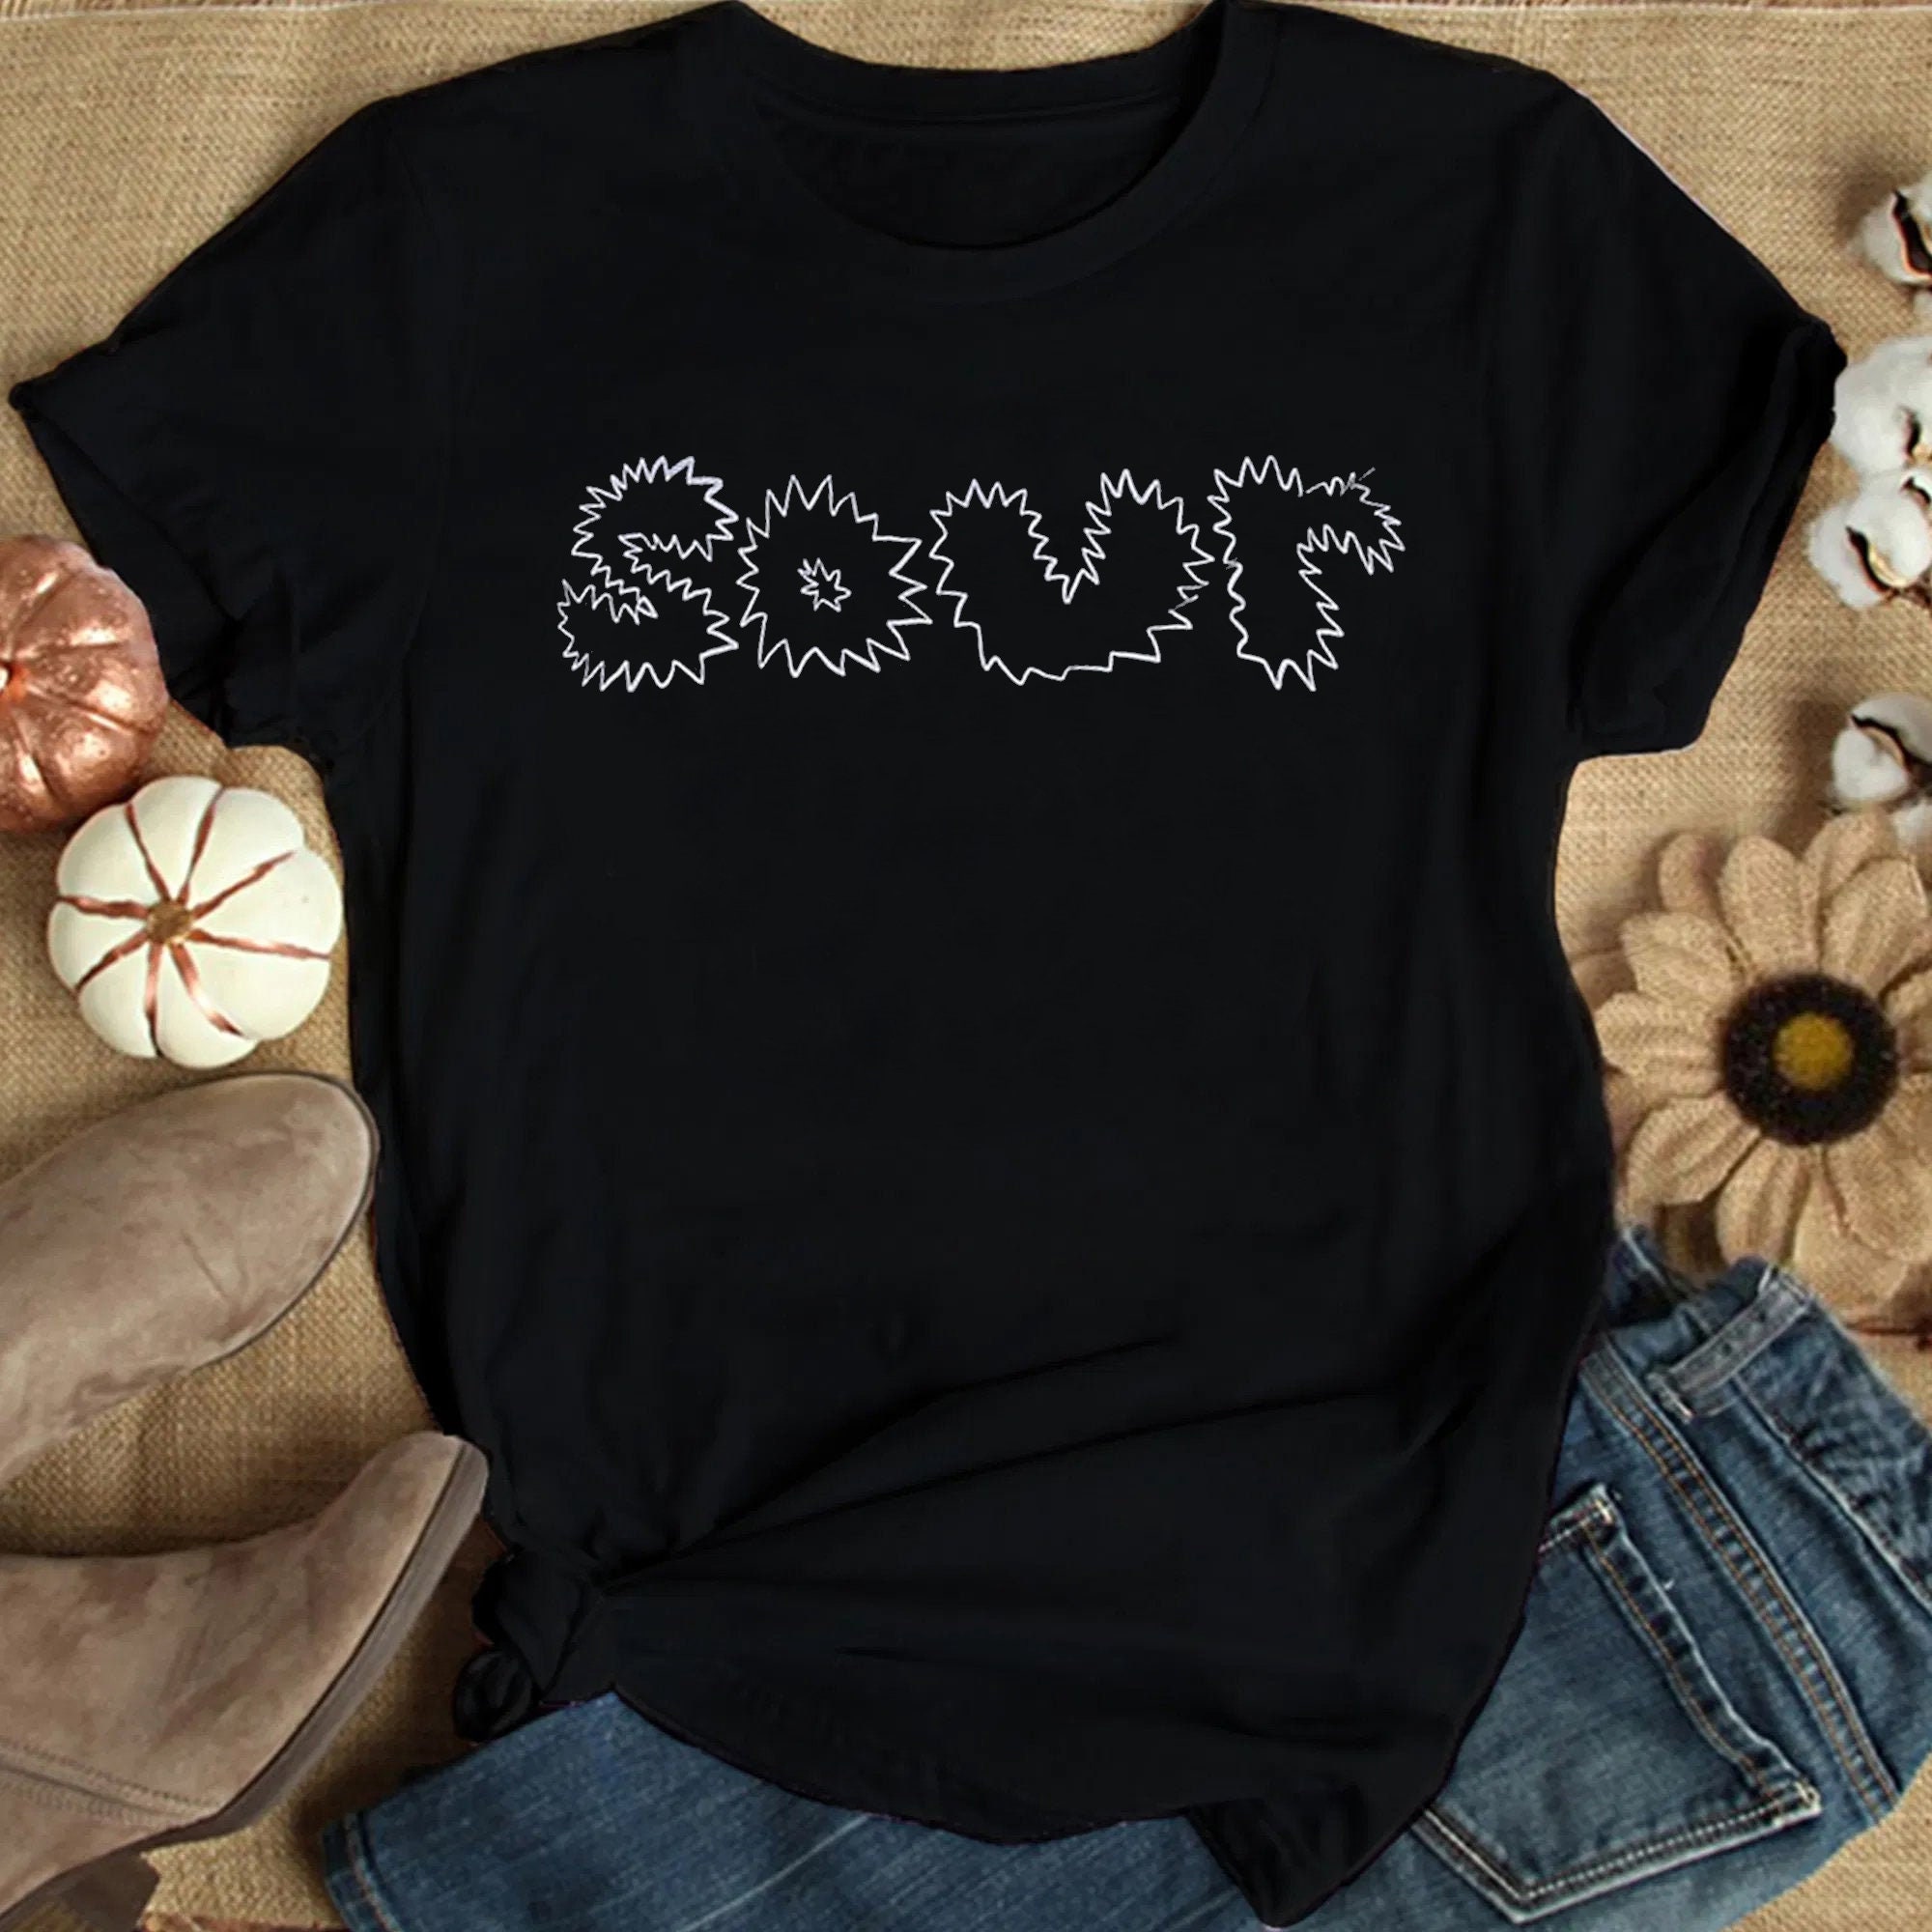 Olivia Rodrigo Target 2021 Tee Good 4 U Shirt SOUR Album | Etsy